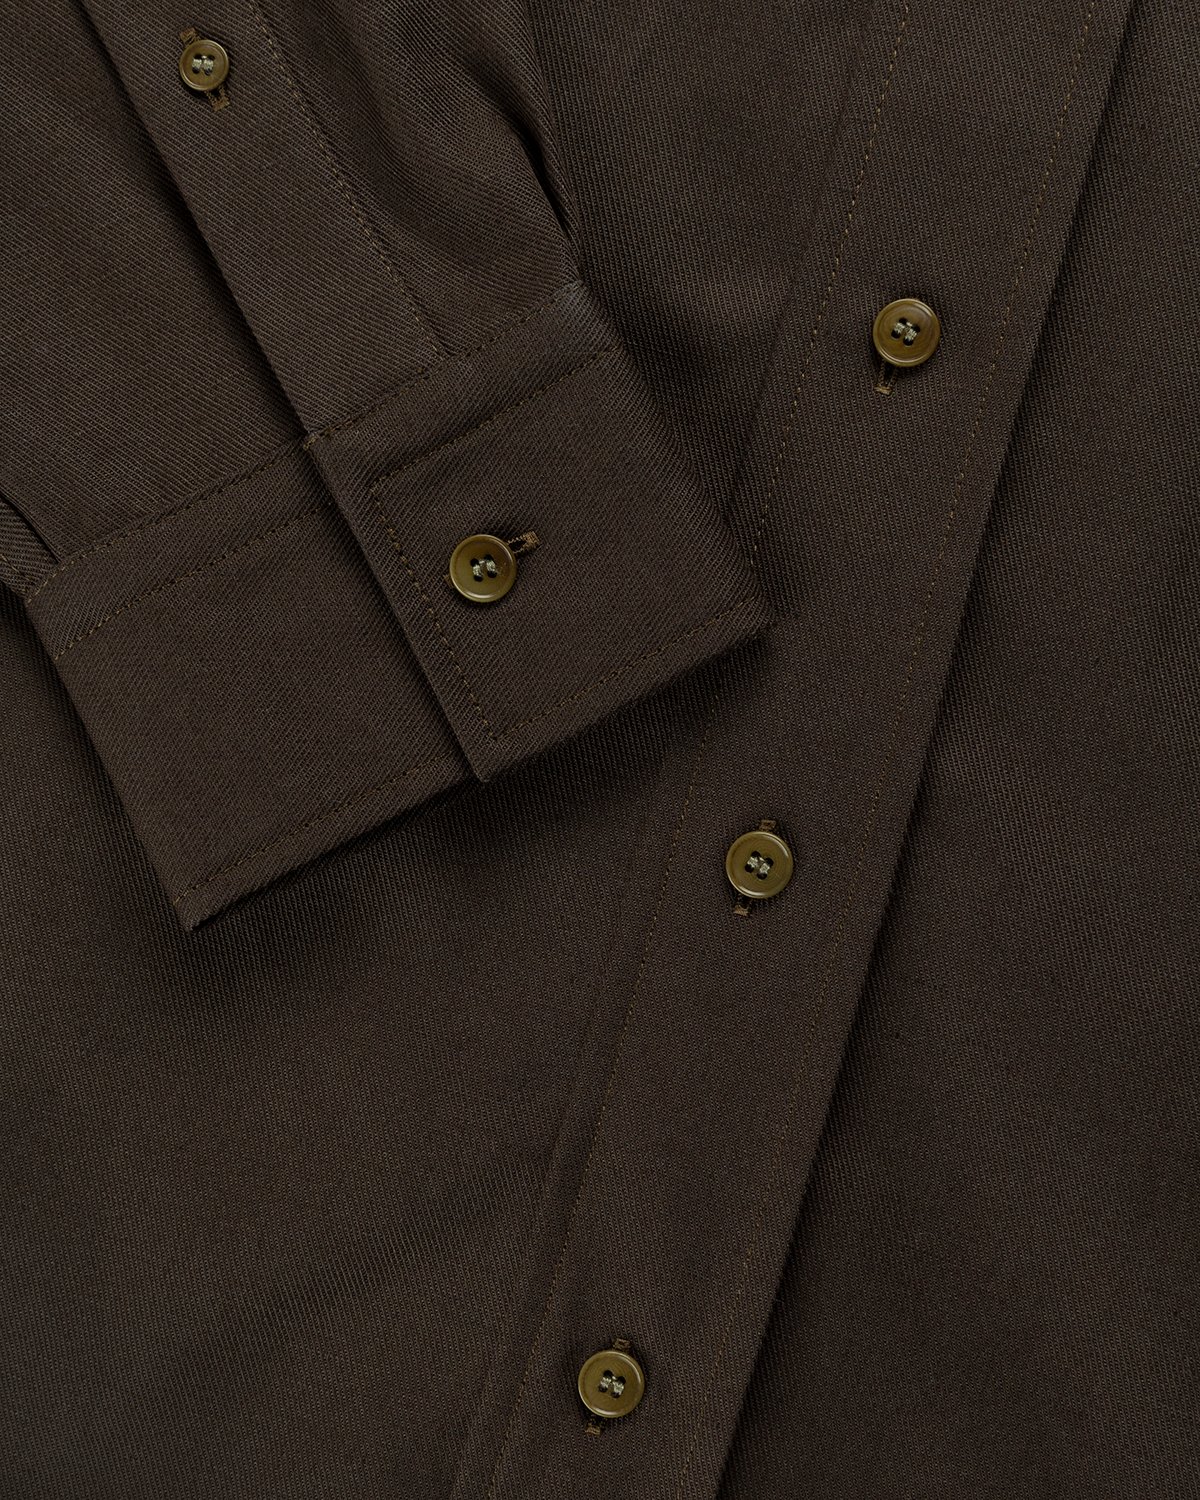 Acne Studios - Linen Blend Button-Up Shirt Dark Olive - Clothing - Green - Image 5